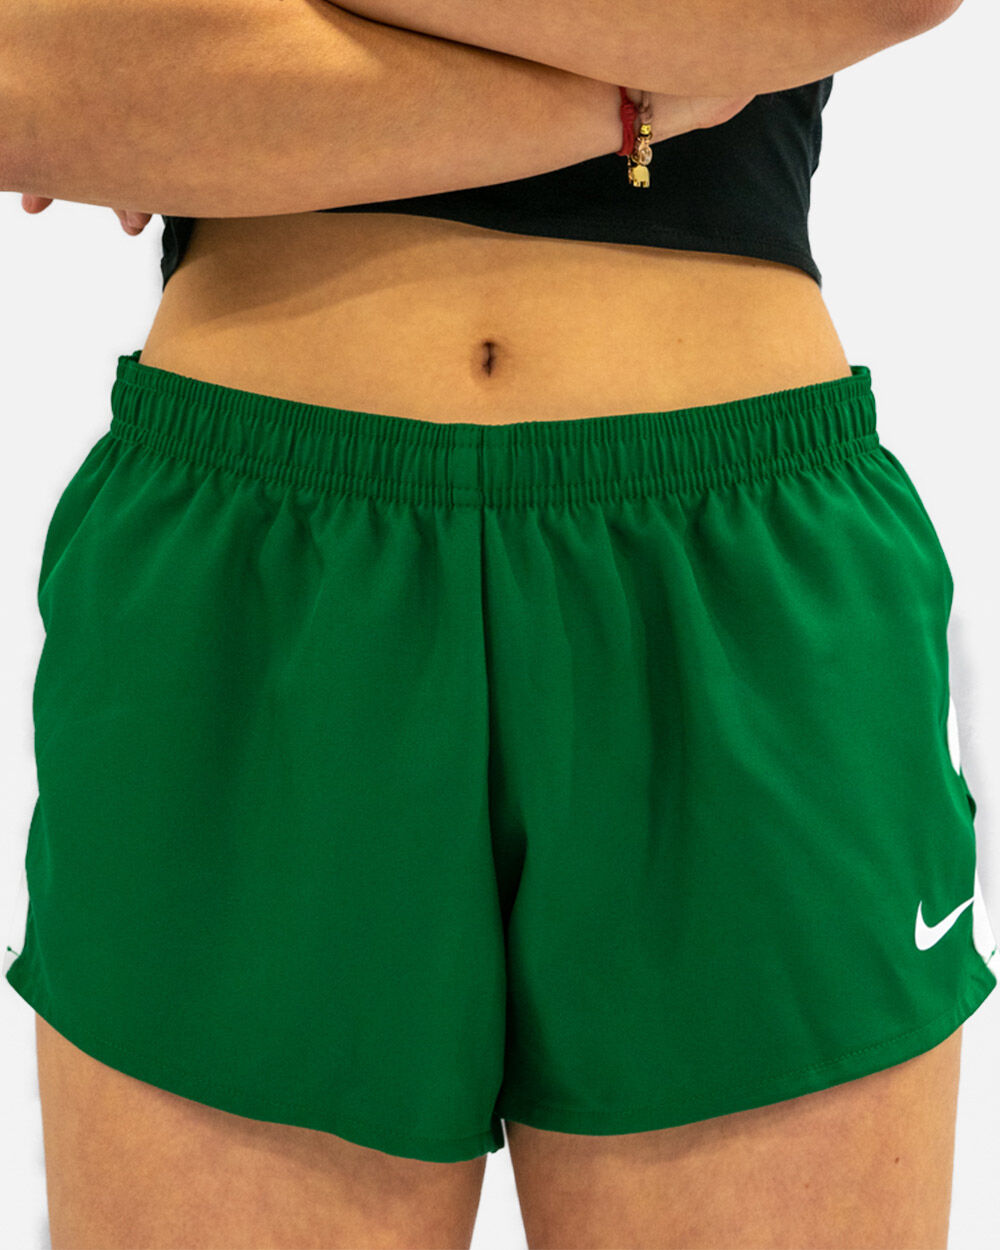 Pantalón corto para correr Nike Stock Verde para Mujeres - NT0304-302